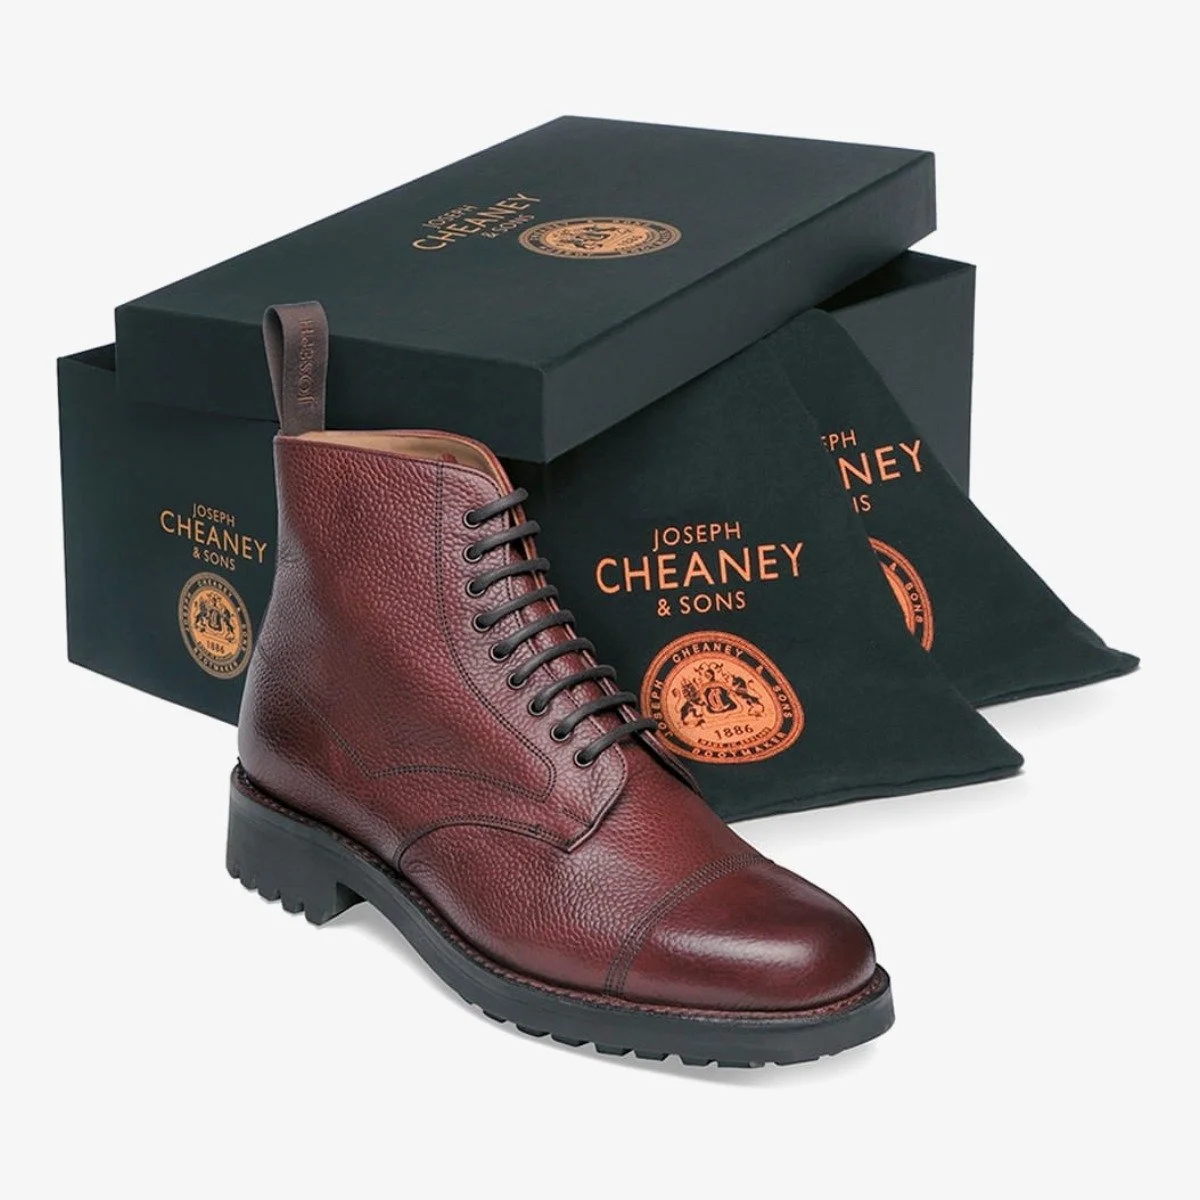 Cheaney Penine II toe cap men's lace-up boots